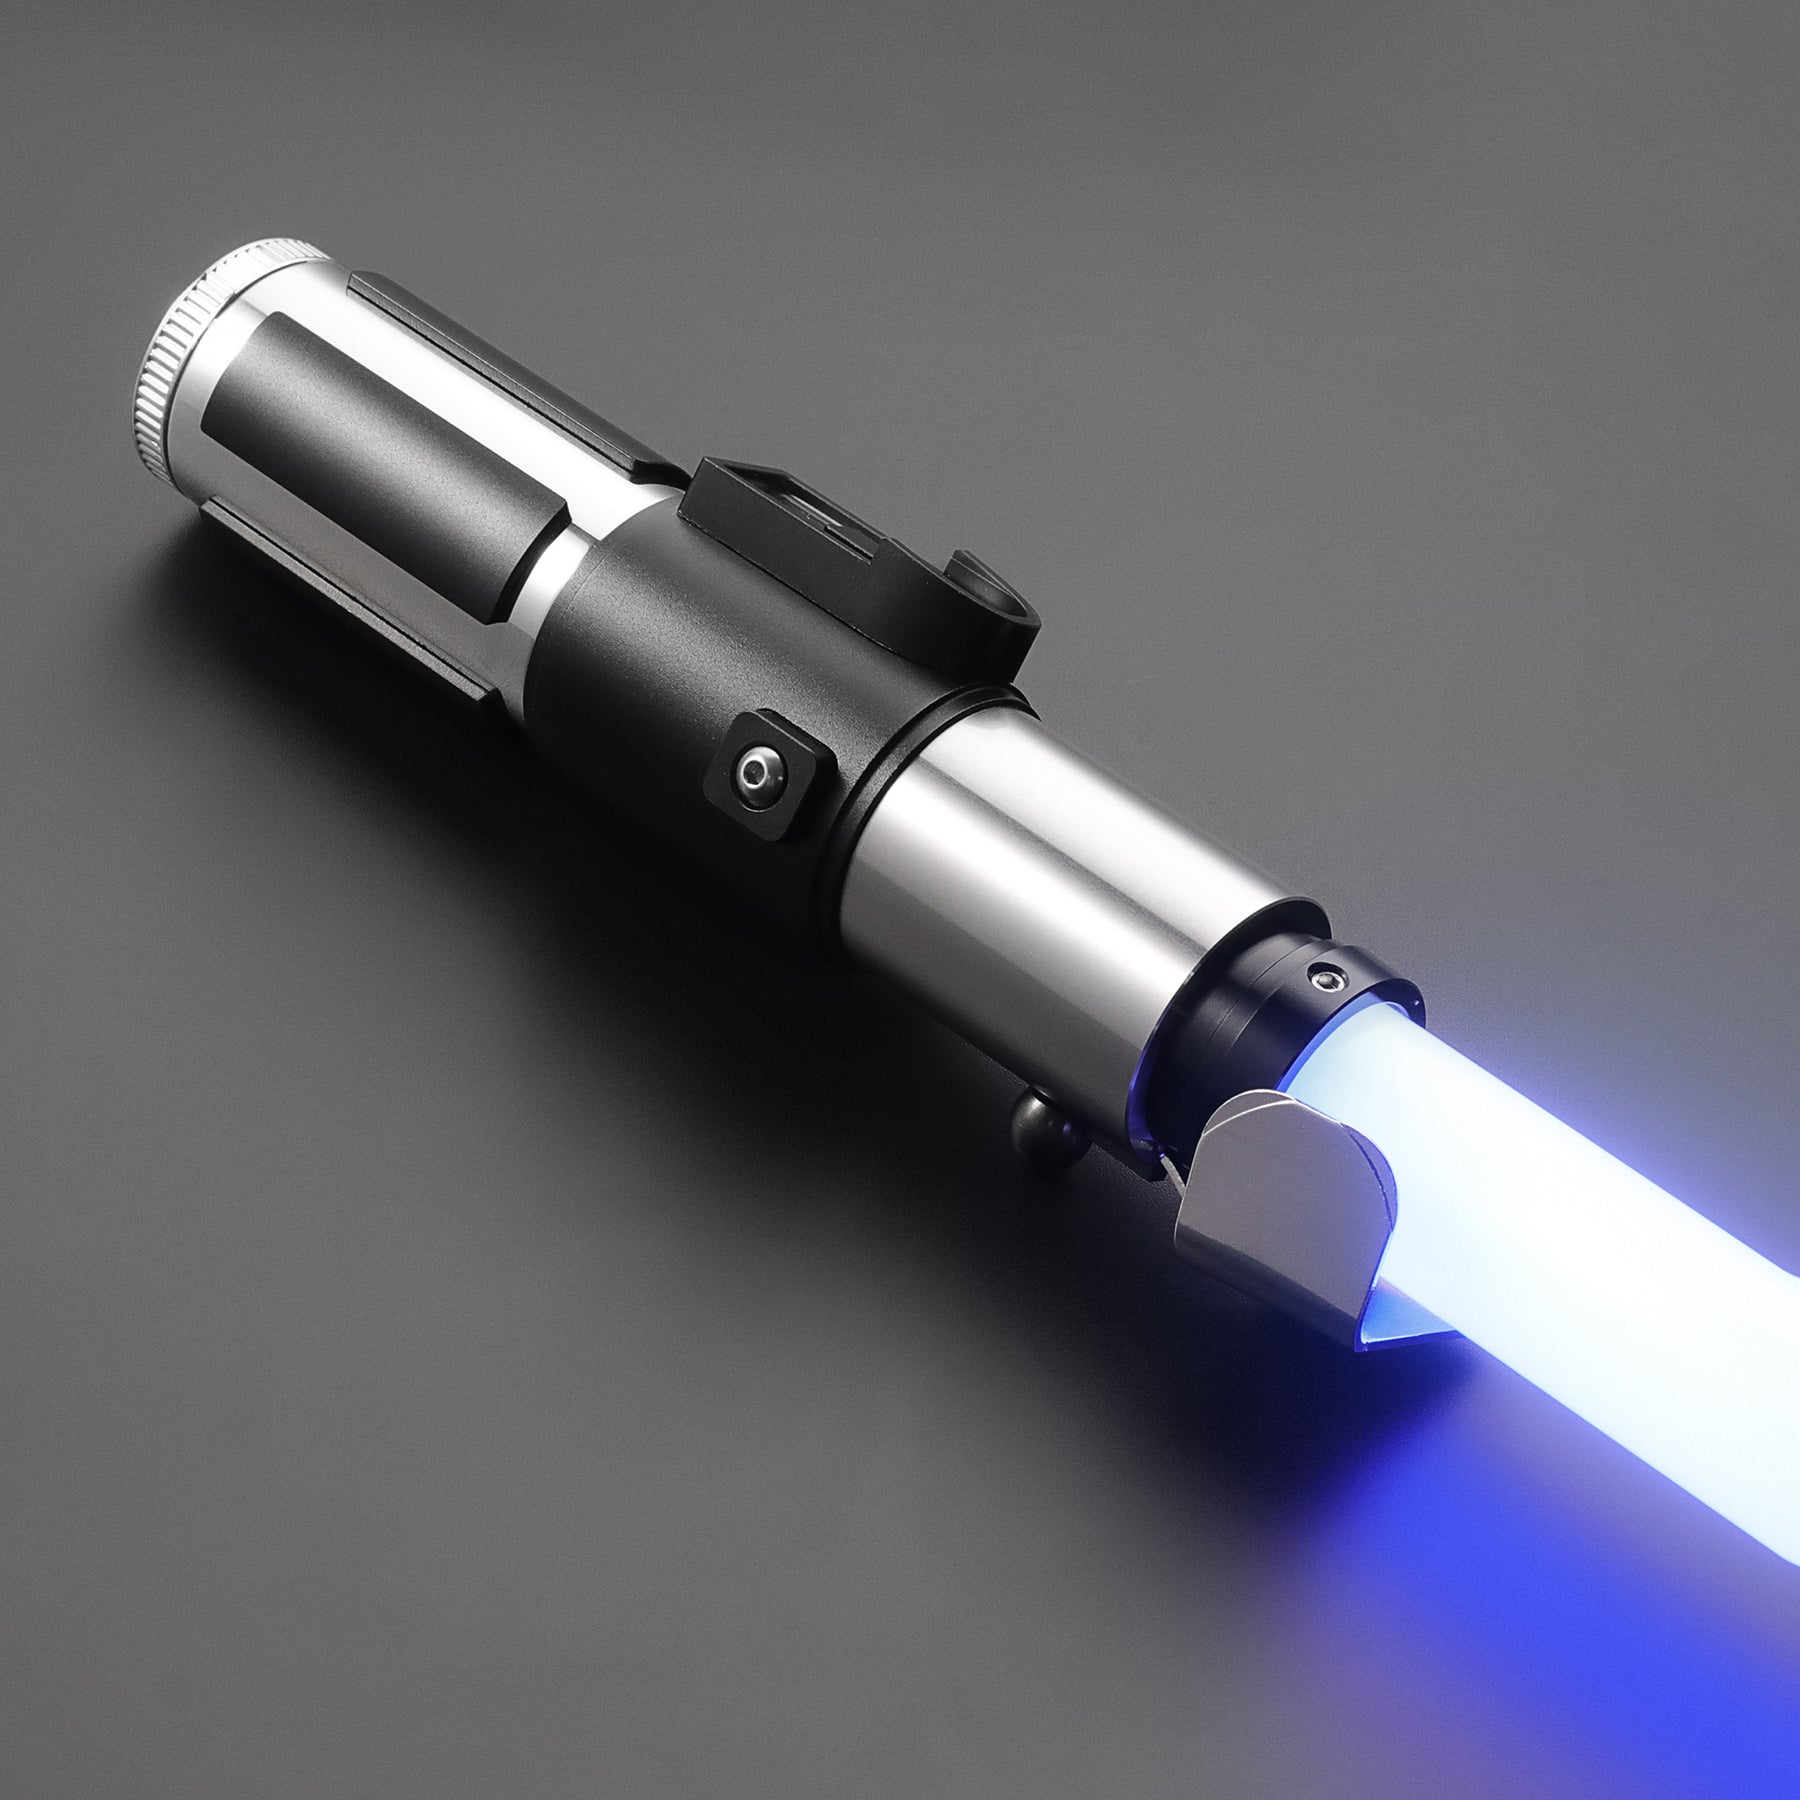 SaberCustom Yoda Lightsaber Xenopixel v3 Light Saber Small Size Collec